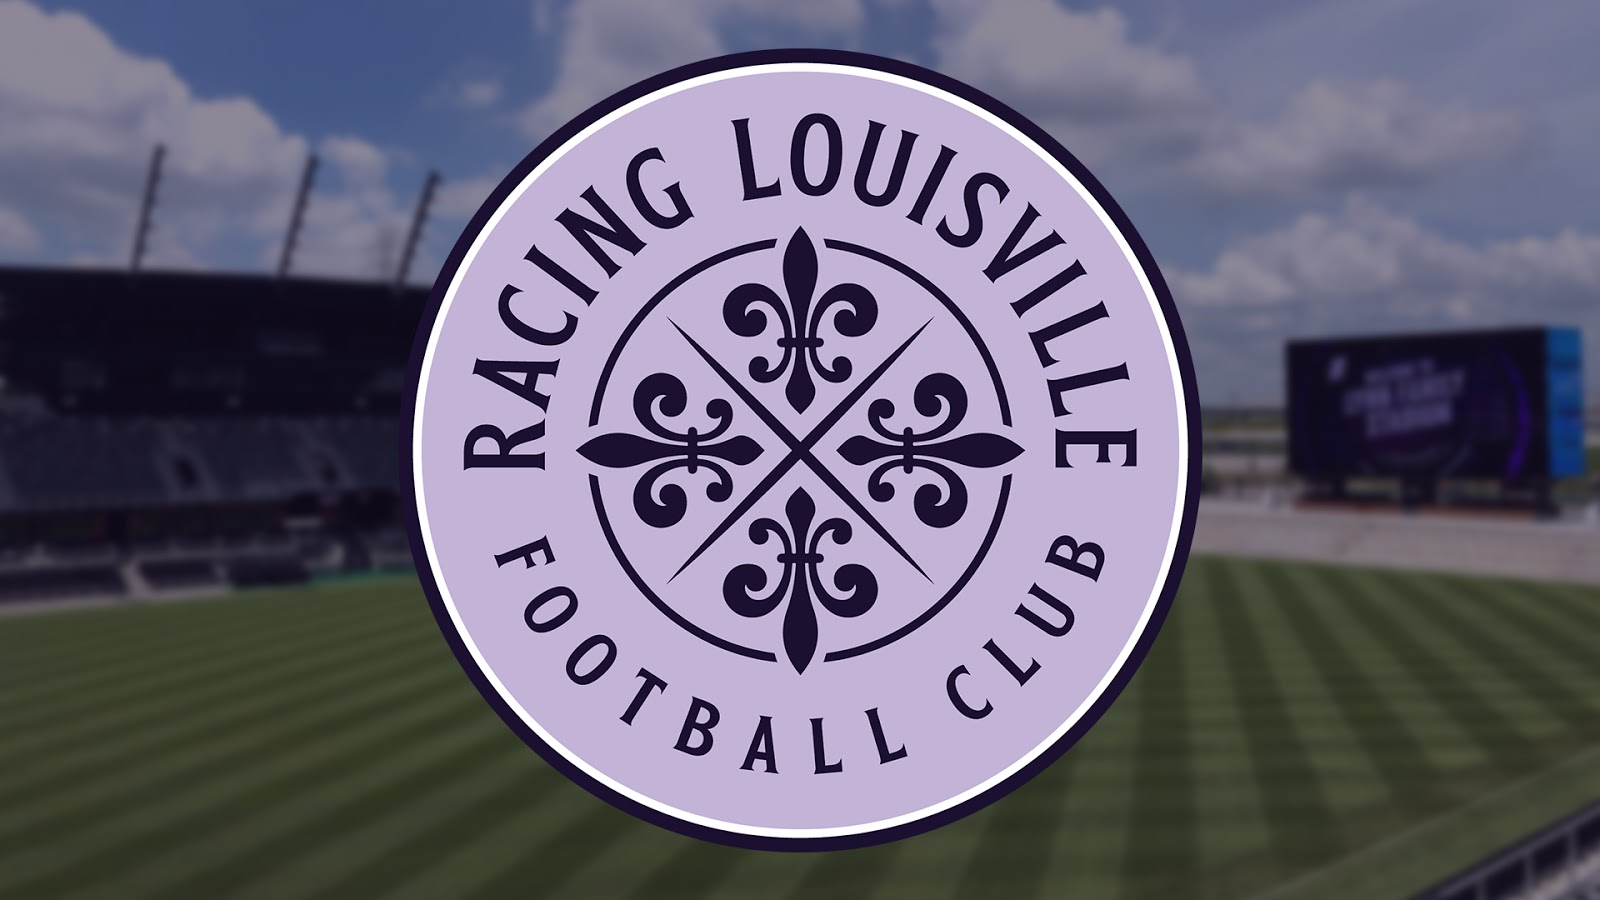 NWSL soccer club named Racing Louisville FC